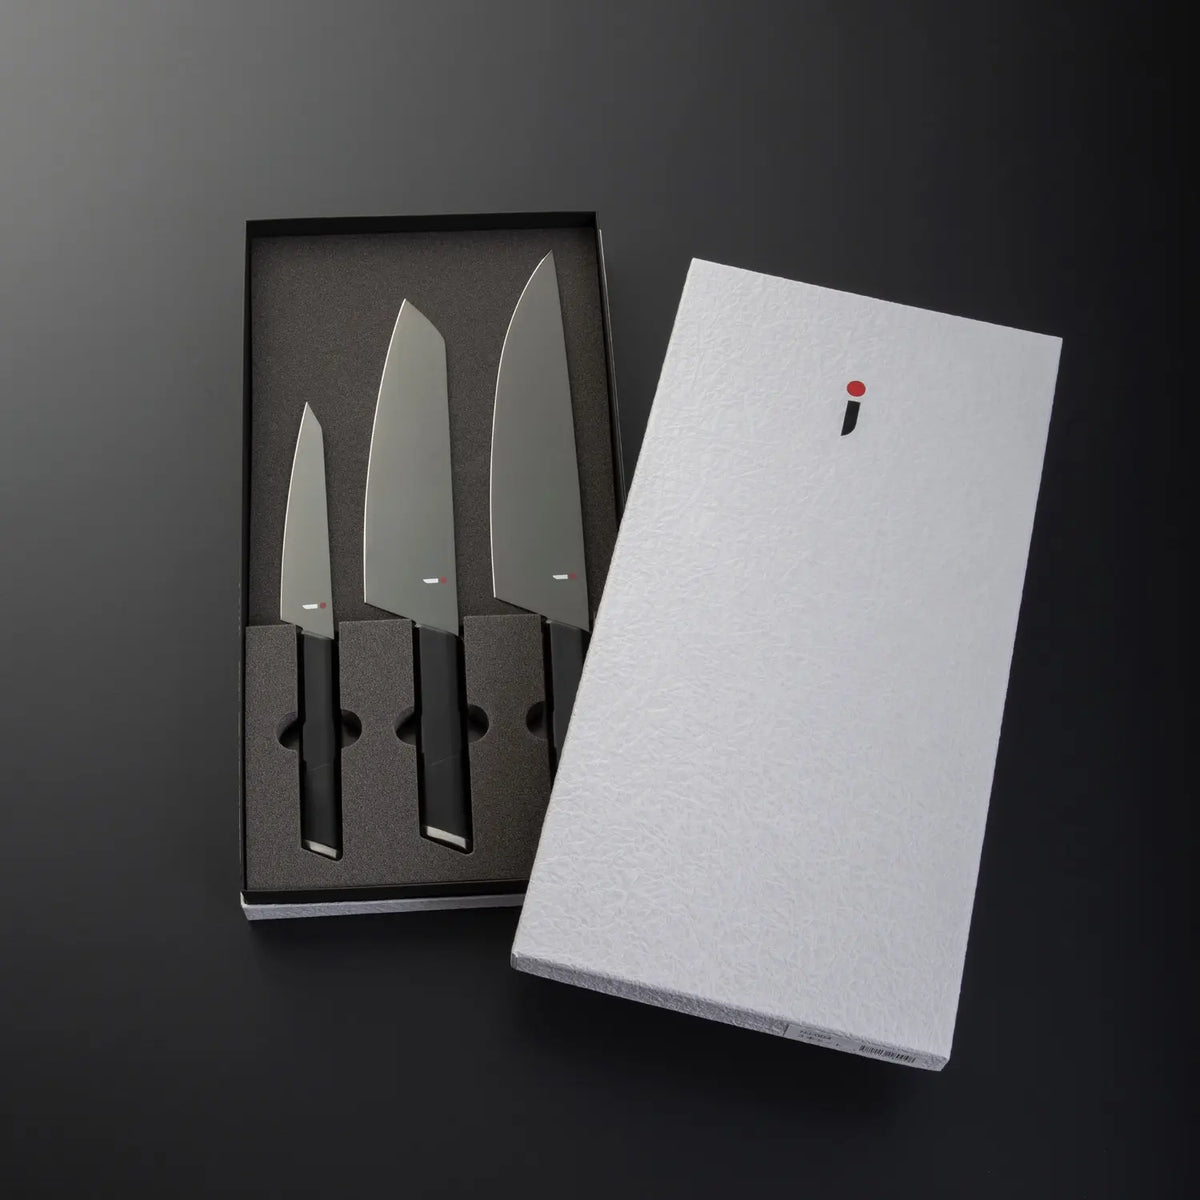 Kitcheniva Stainless Steel Chopping Knife 3 Pcs Set, 1 Set - Fred Meyer